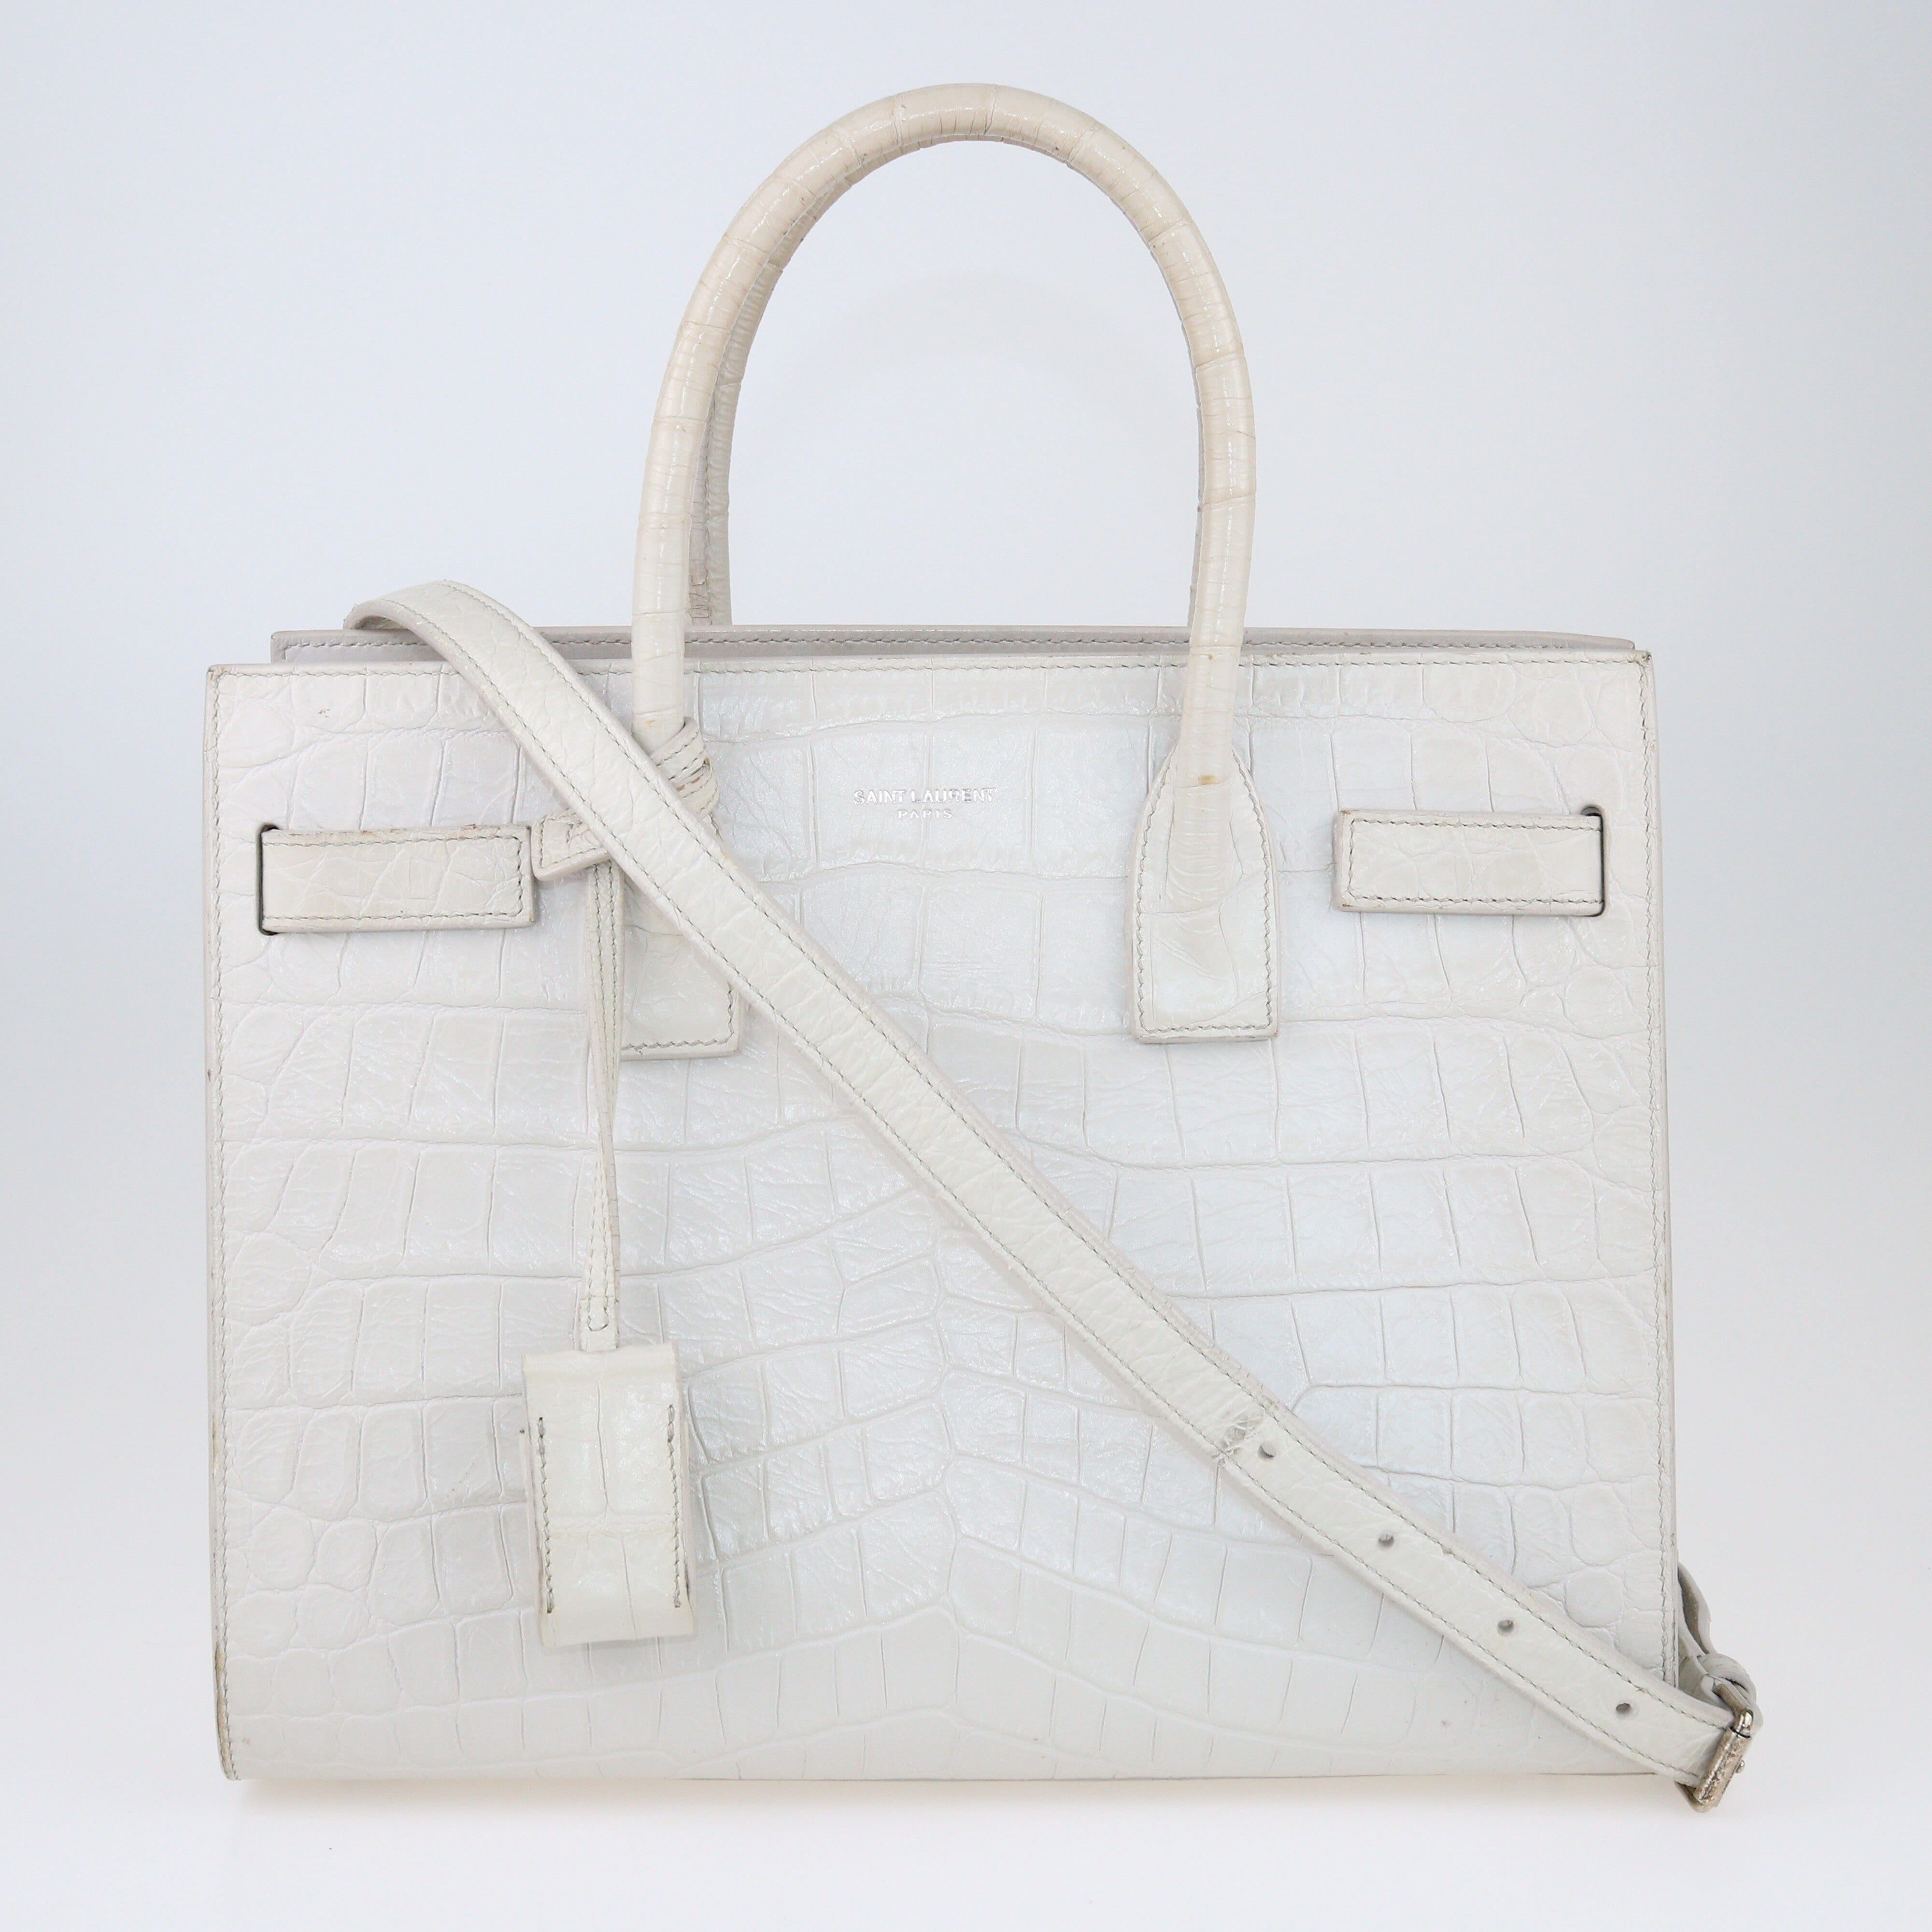 Grey Sac De Jour Handbags Bags Saint Laurent 